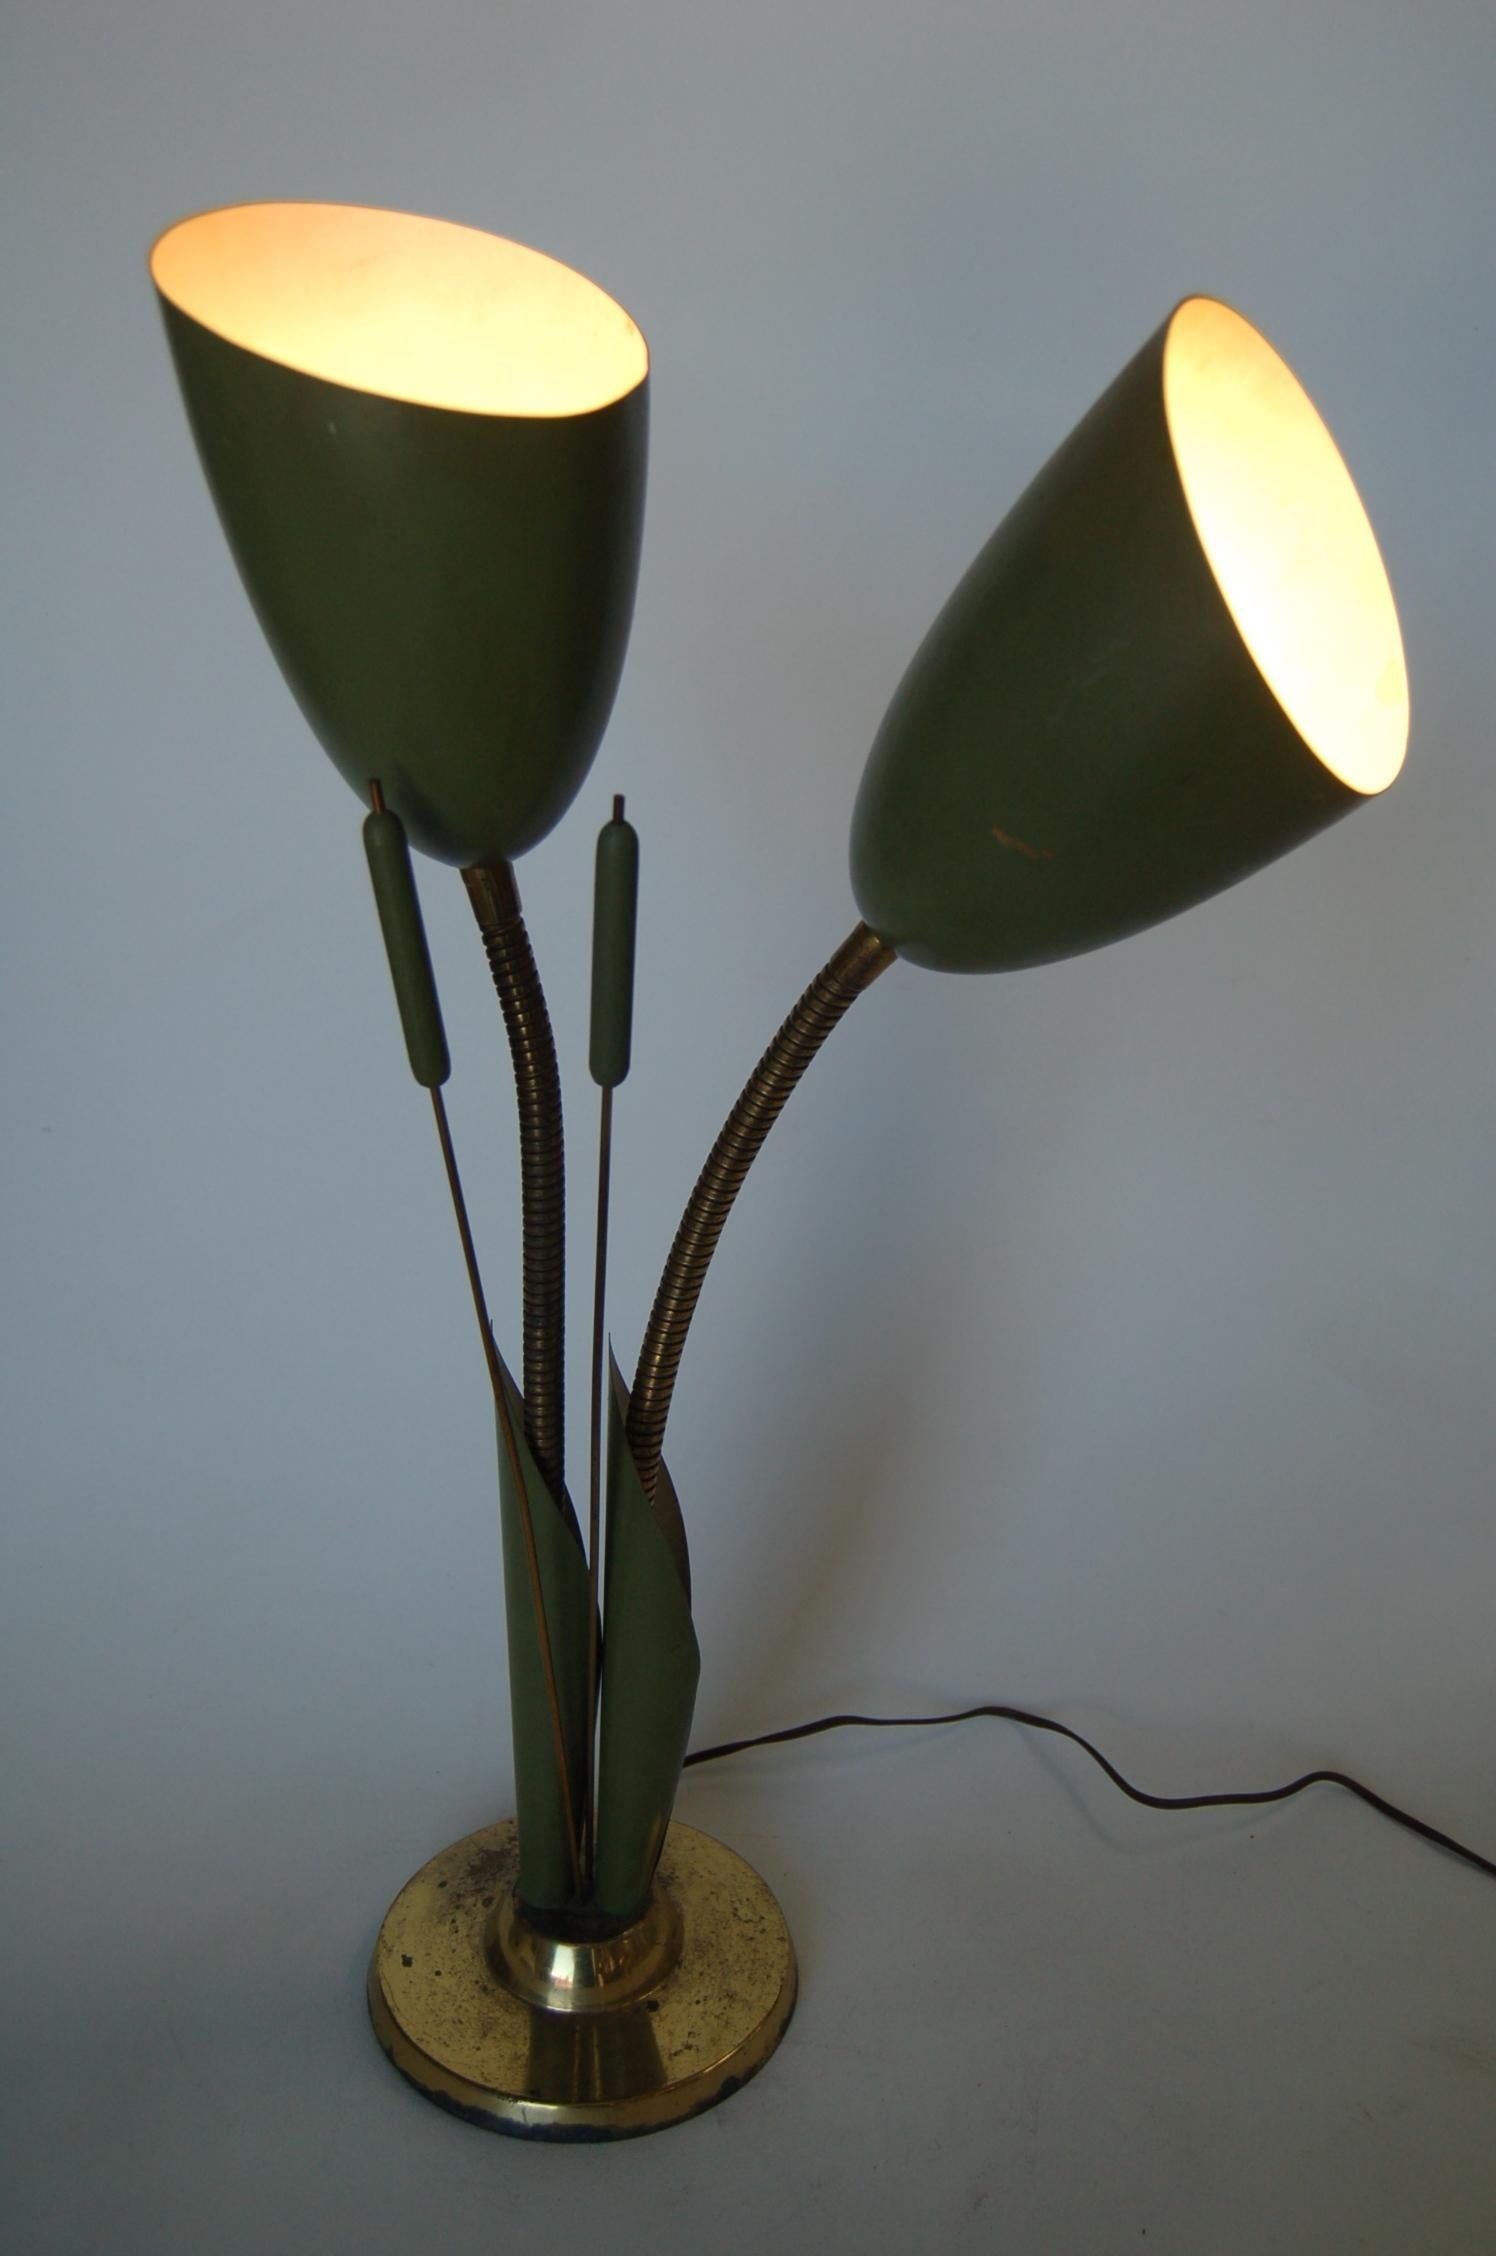 Midcentury green metal cone double gooseneck adjustable flex arm calla lily desk table lamp. 3 way light switch. 

Measures: 7